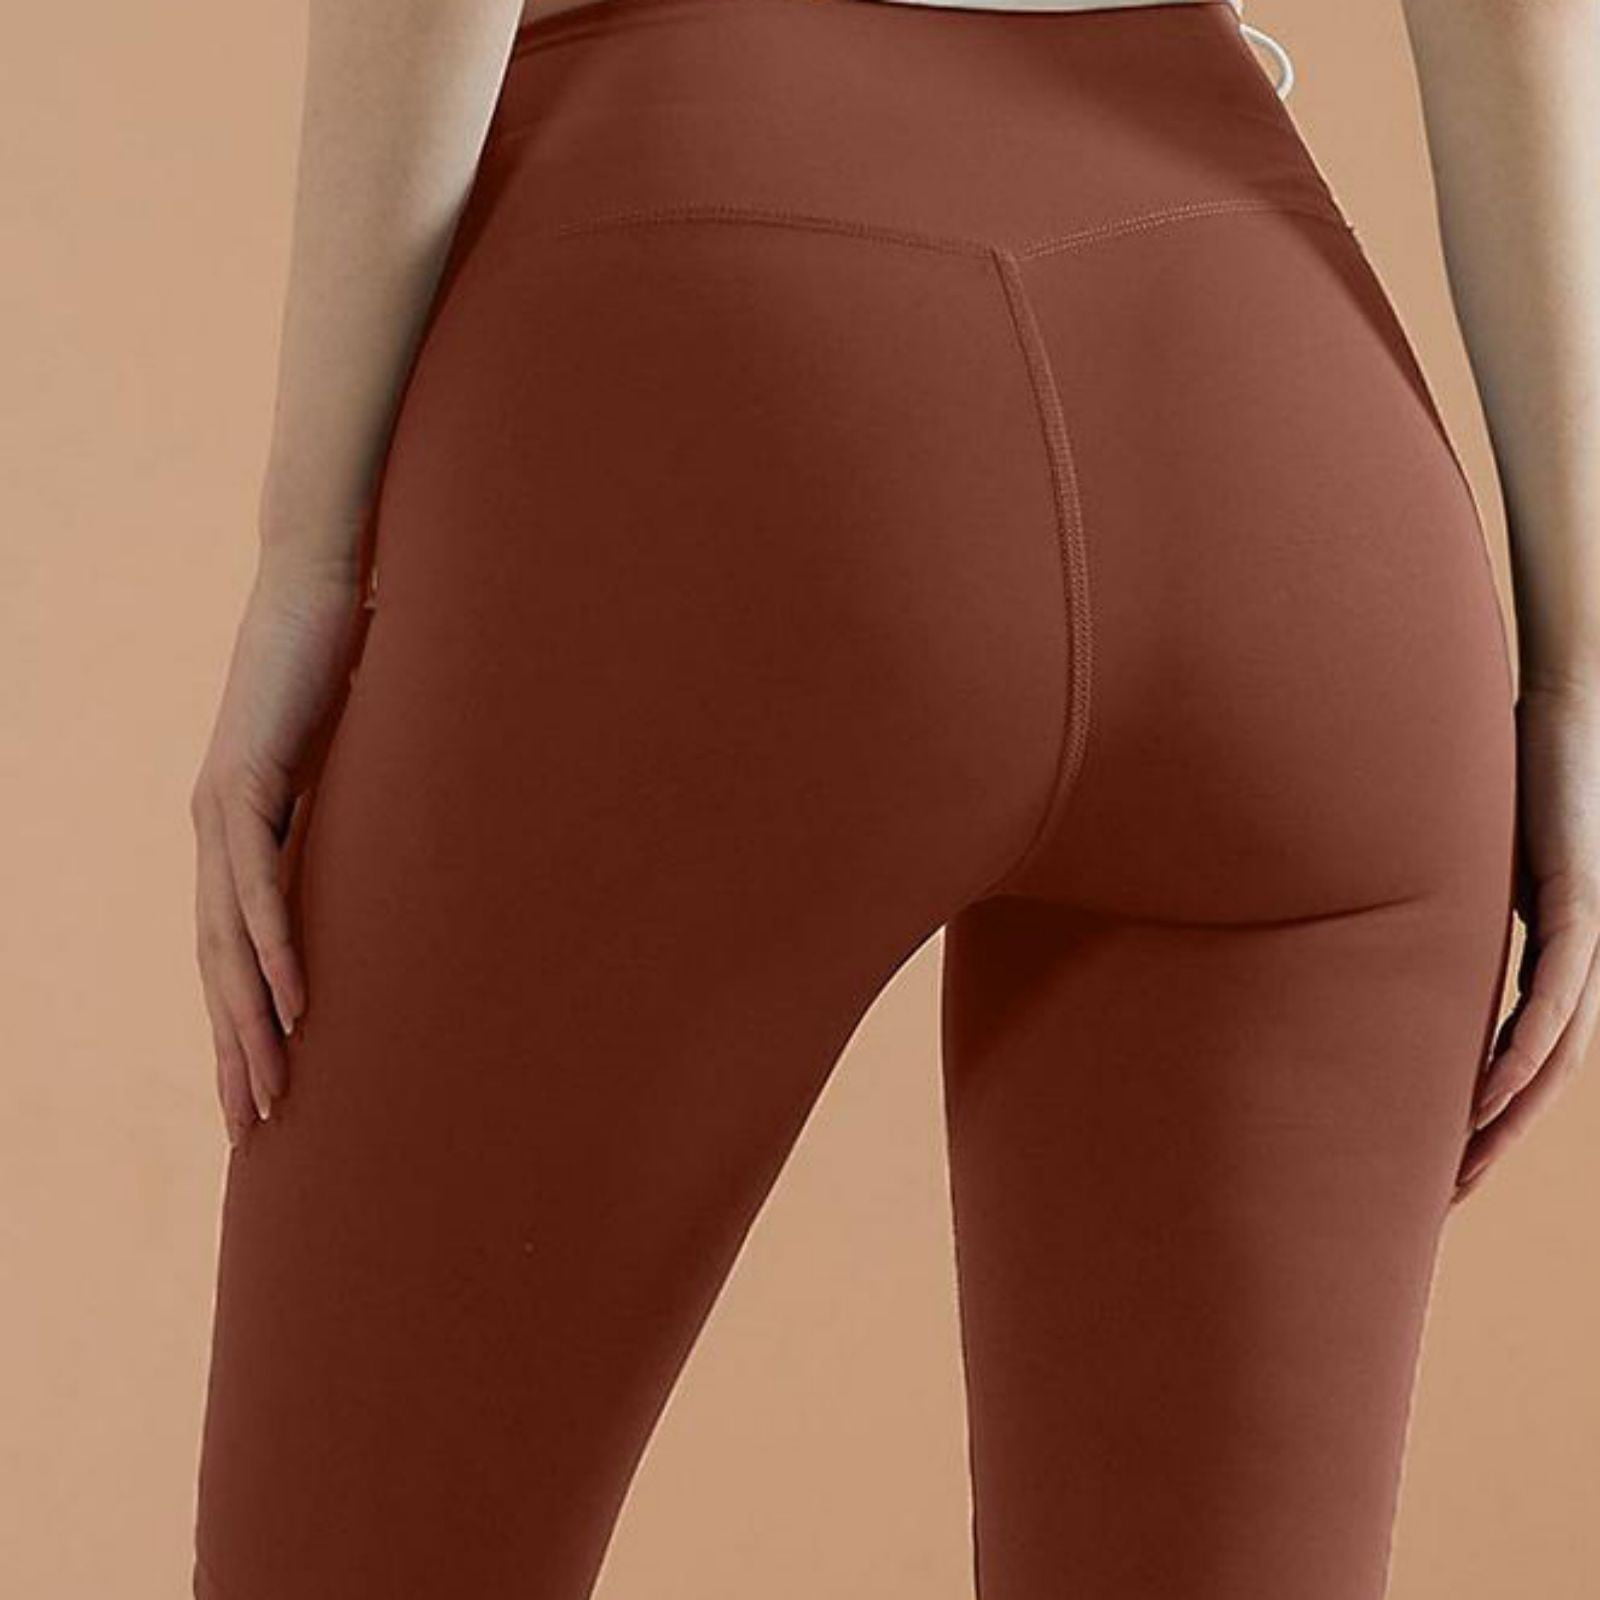 adviicd Yoga Pants For Girls Wide Leg Yoga Pants For Women High Waist Yoga  pants for Women Tummy Control Running Workout pants Blue S 